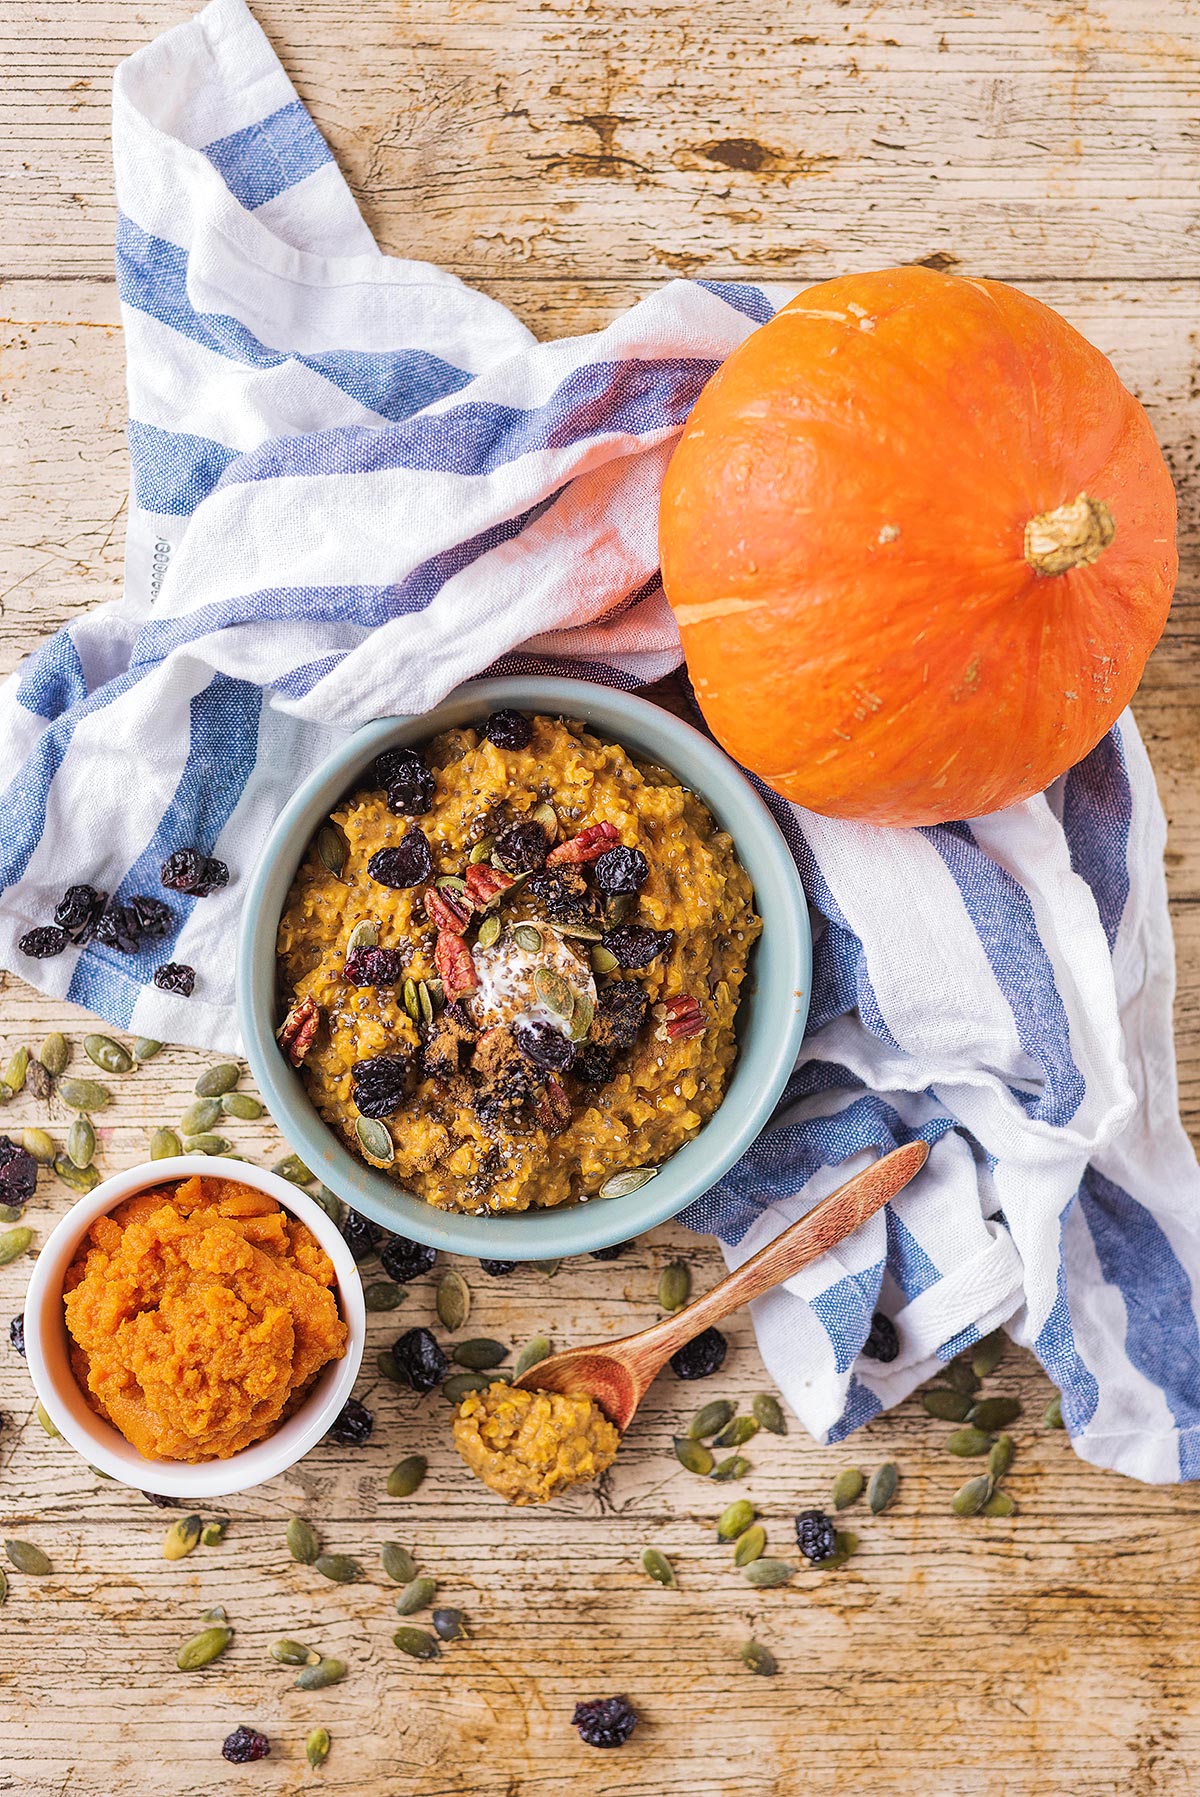 A bowl of porridge next to a smaller bowl of pumpkin puree and a whole pumpkin.